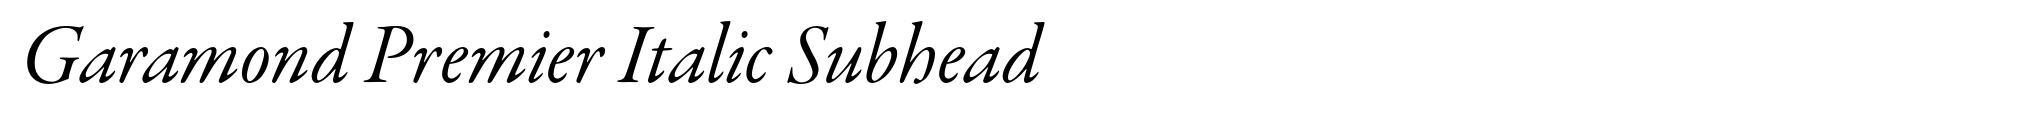 Garamond Premier Italic Subhead image